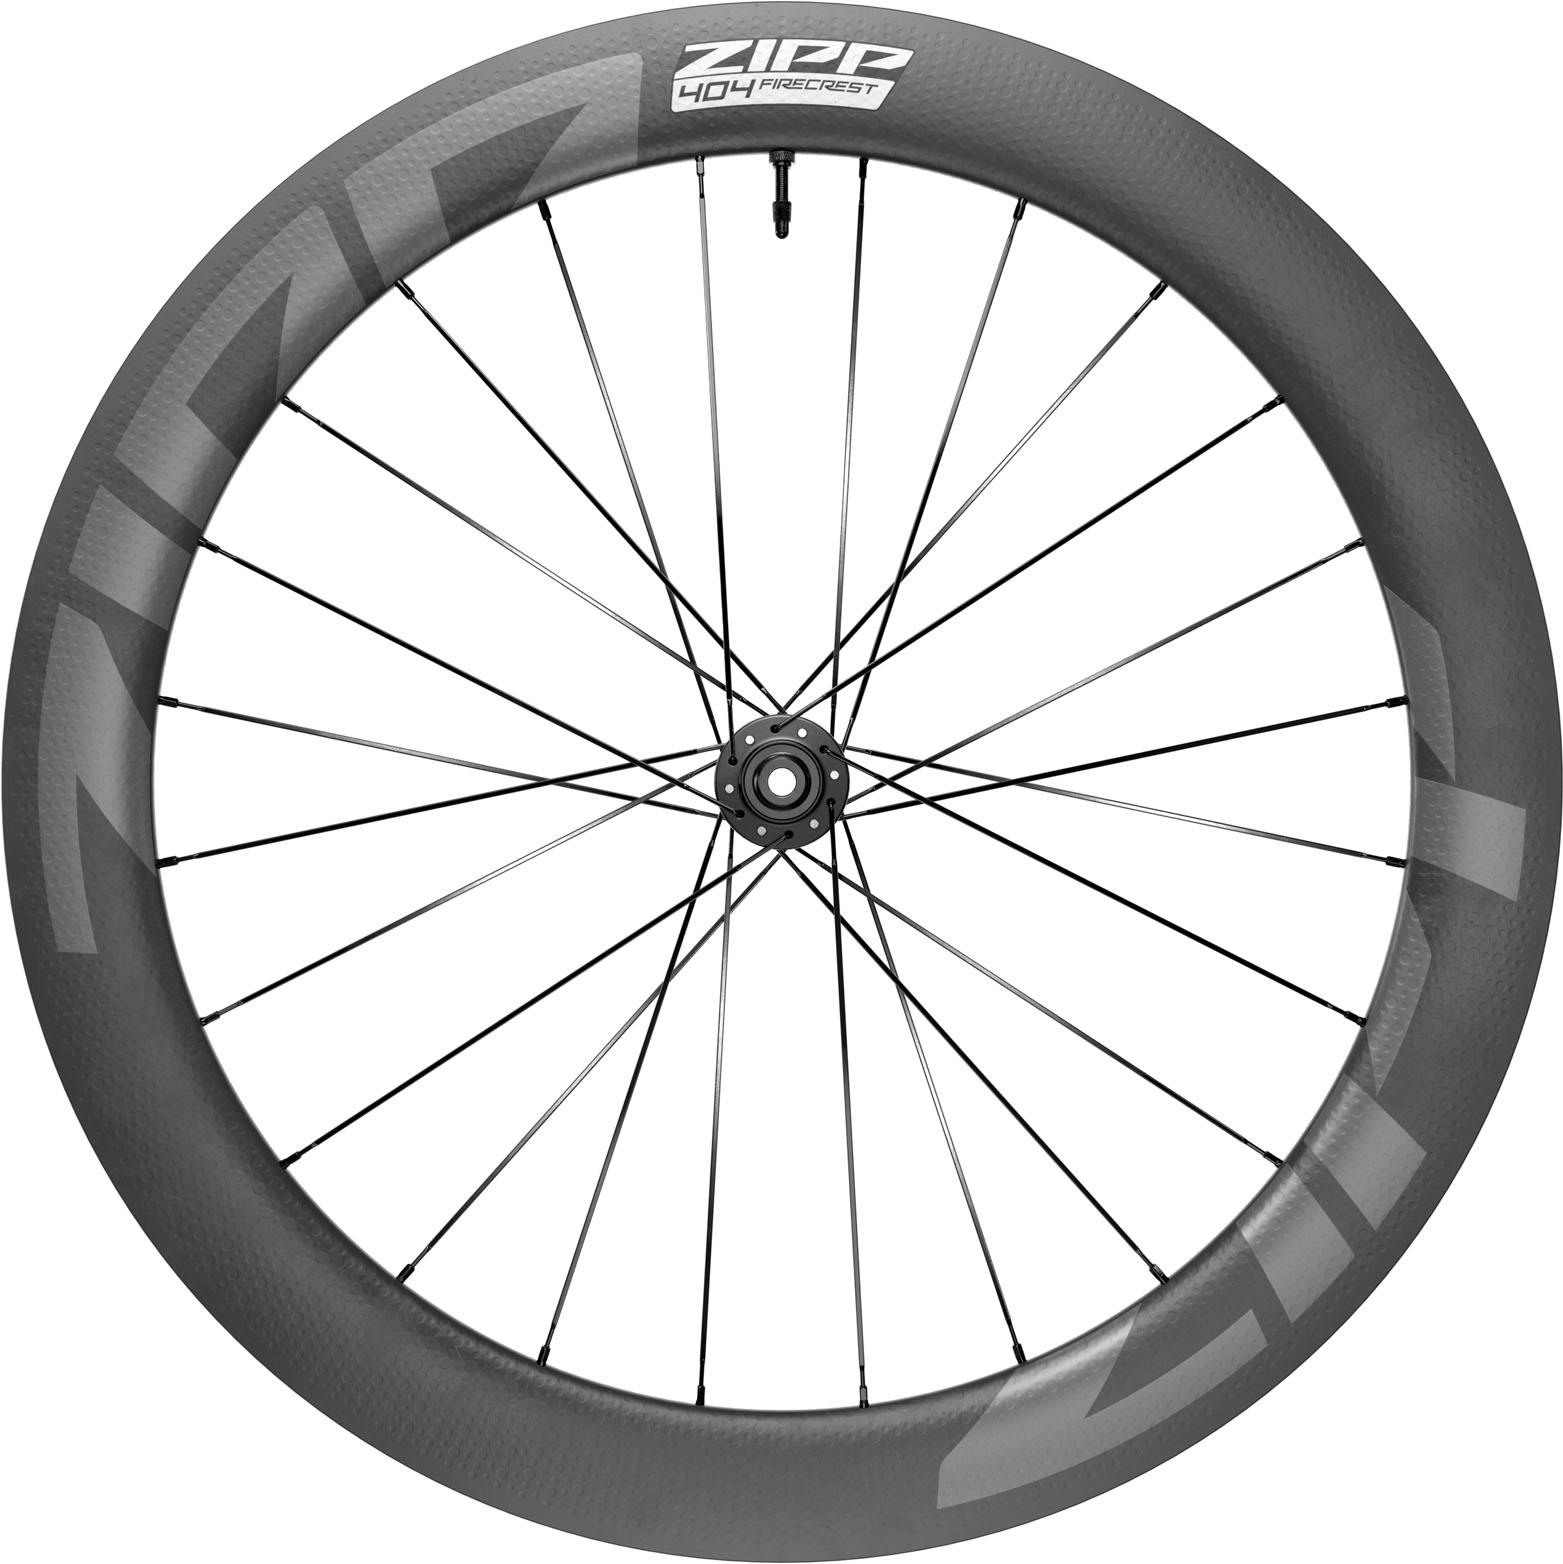 Zipp 404 Firecrest Carbon Tubeless Disc Front Wheel - Black